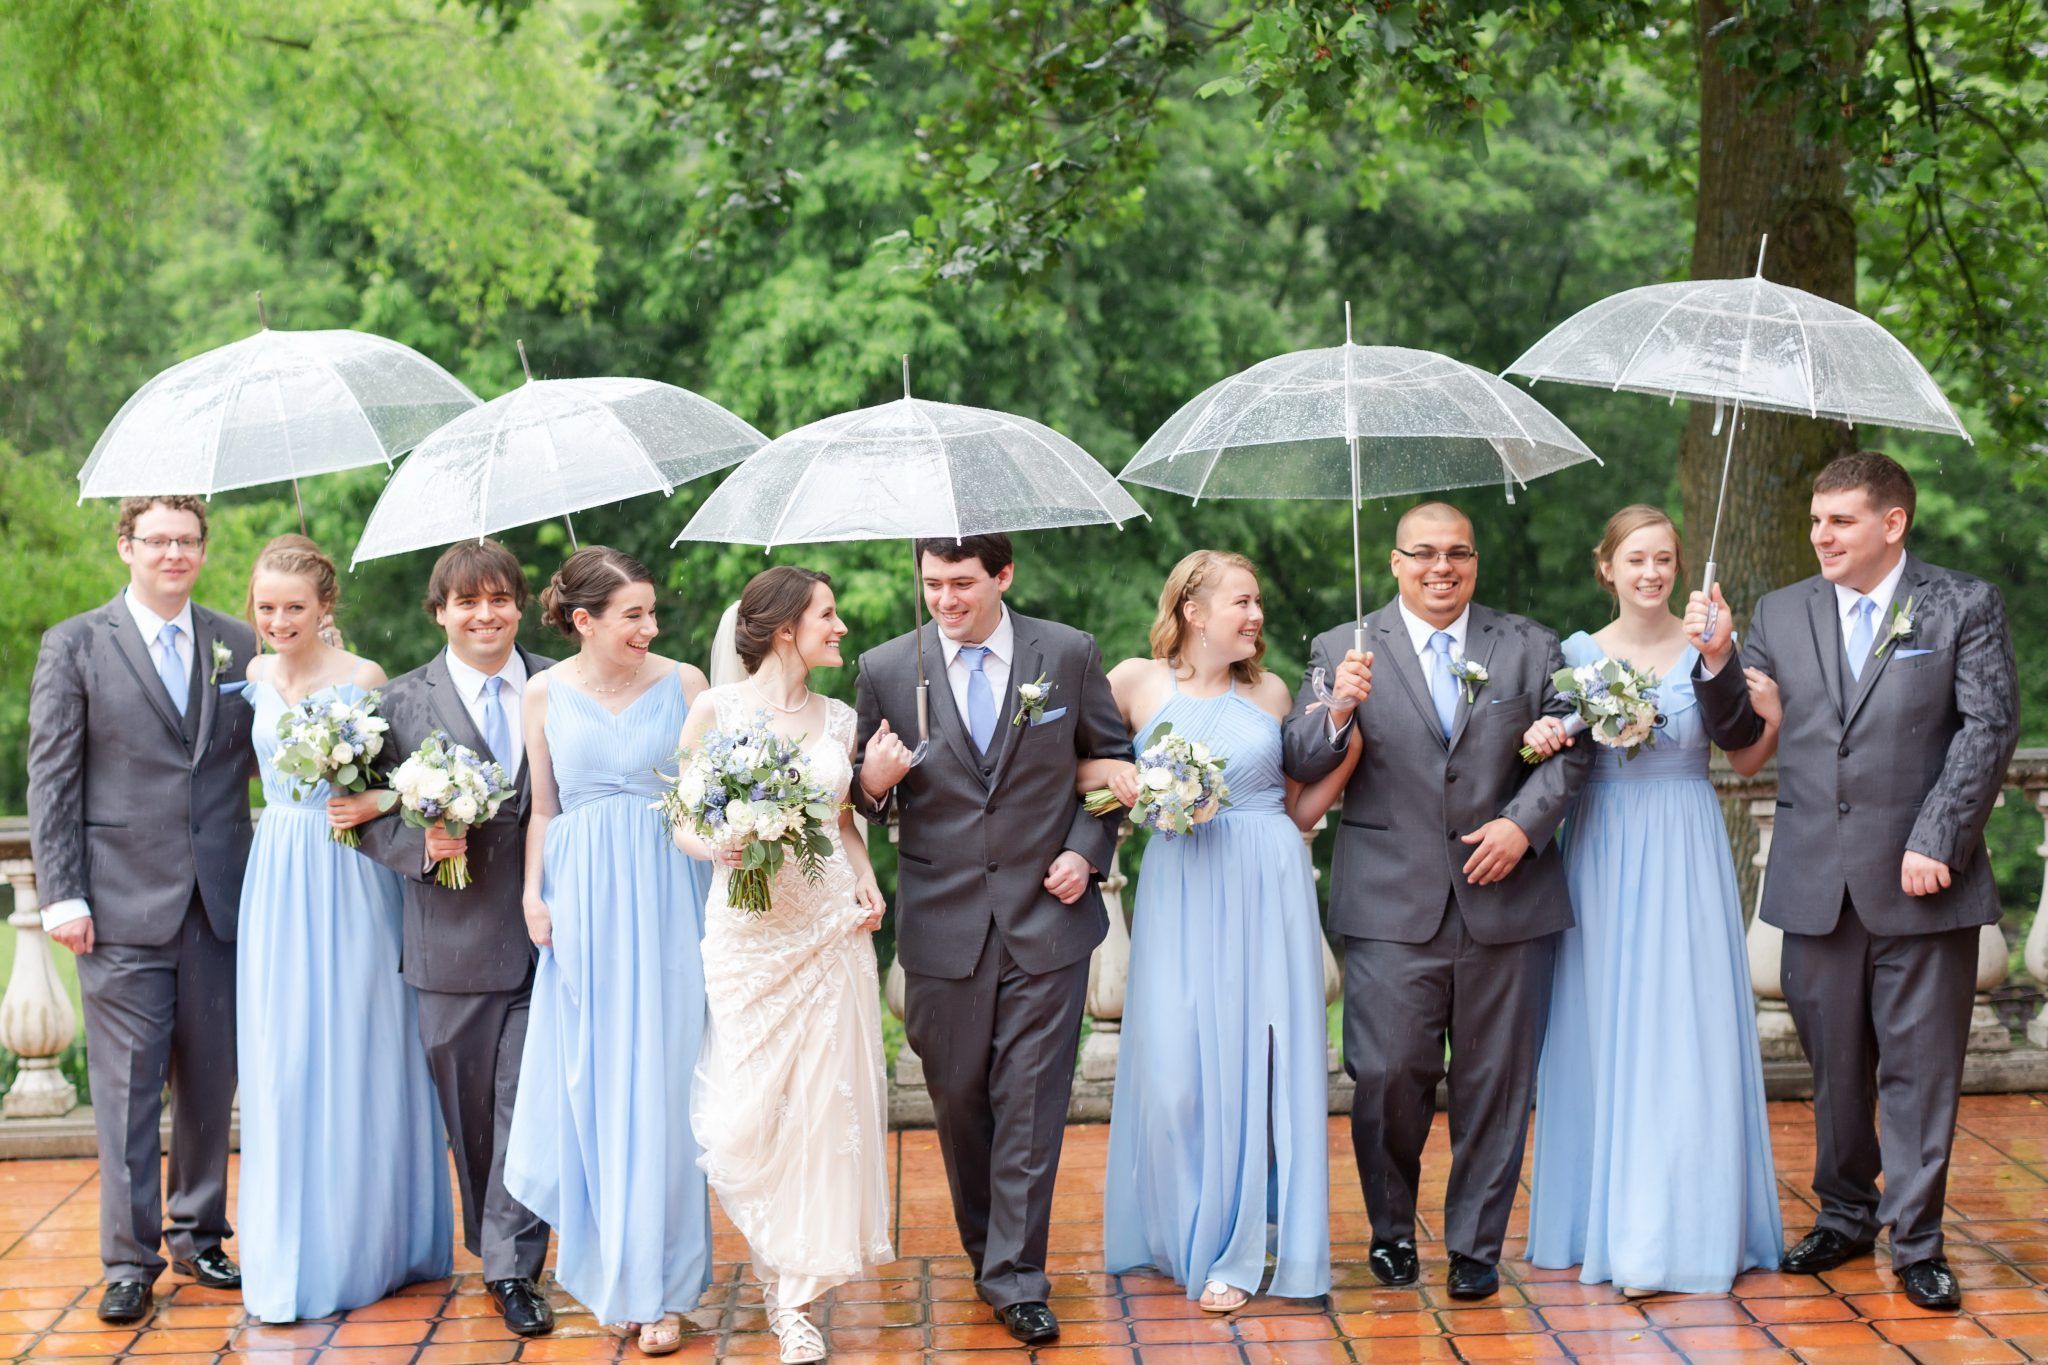 Ryan and Lauren: A Romantic and Whimsical Spring Garden Wedding | Tulle & Chantilly Wedding Blog -   19 wedding Spring ideas